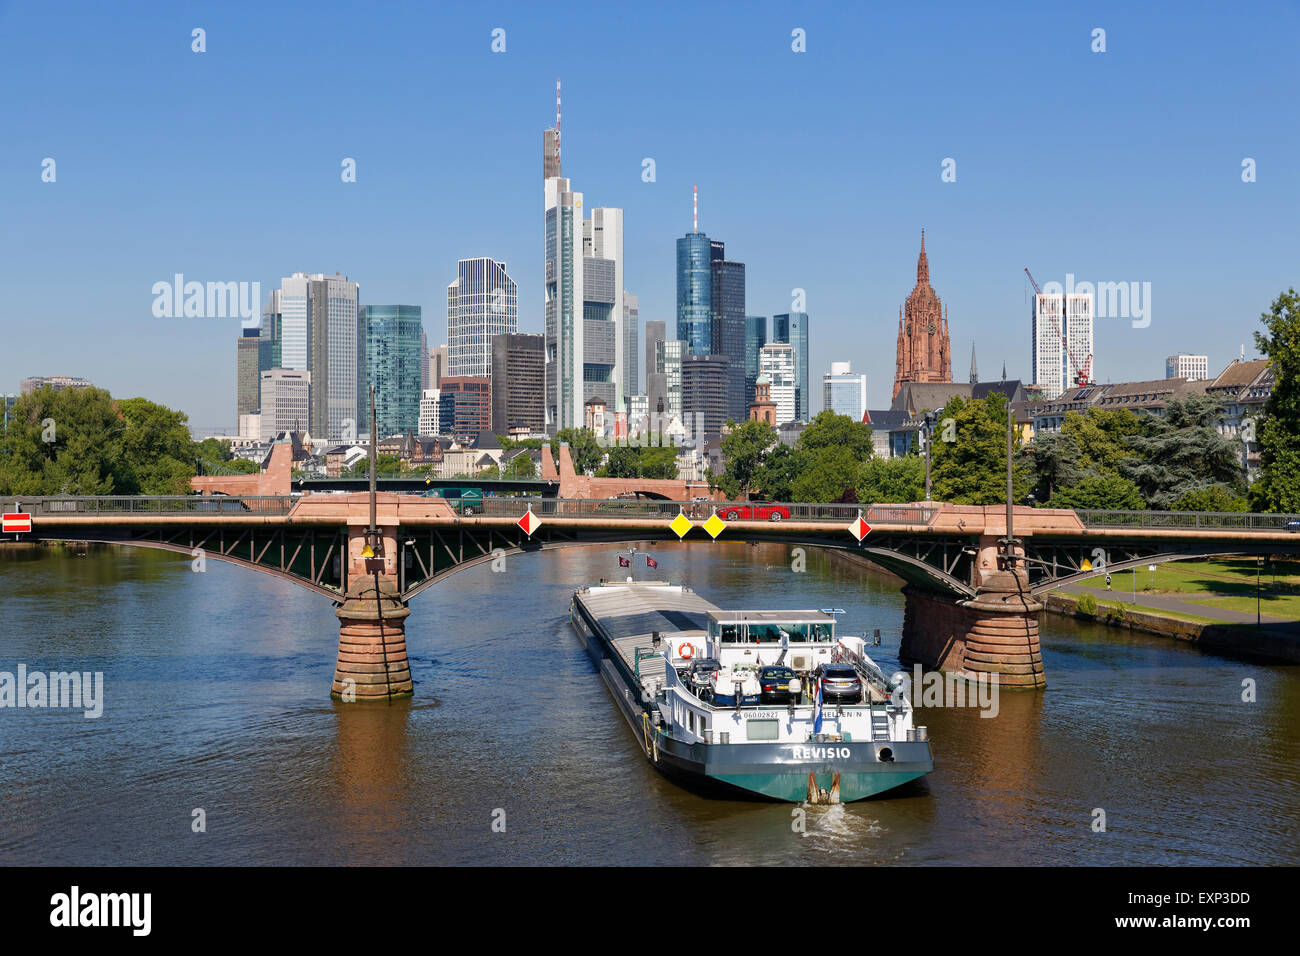 Skyline with cathedral, freighter beneath Ignatz Bubis Bridge, Frankfurt am Main, Hesse, Germany Stock Photo